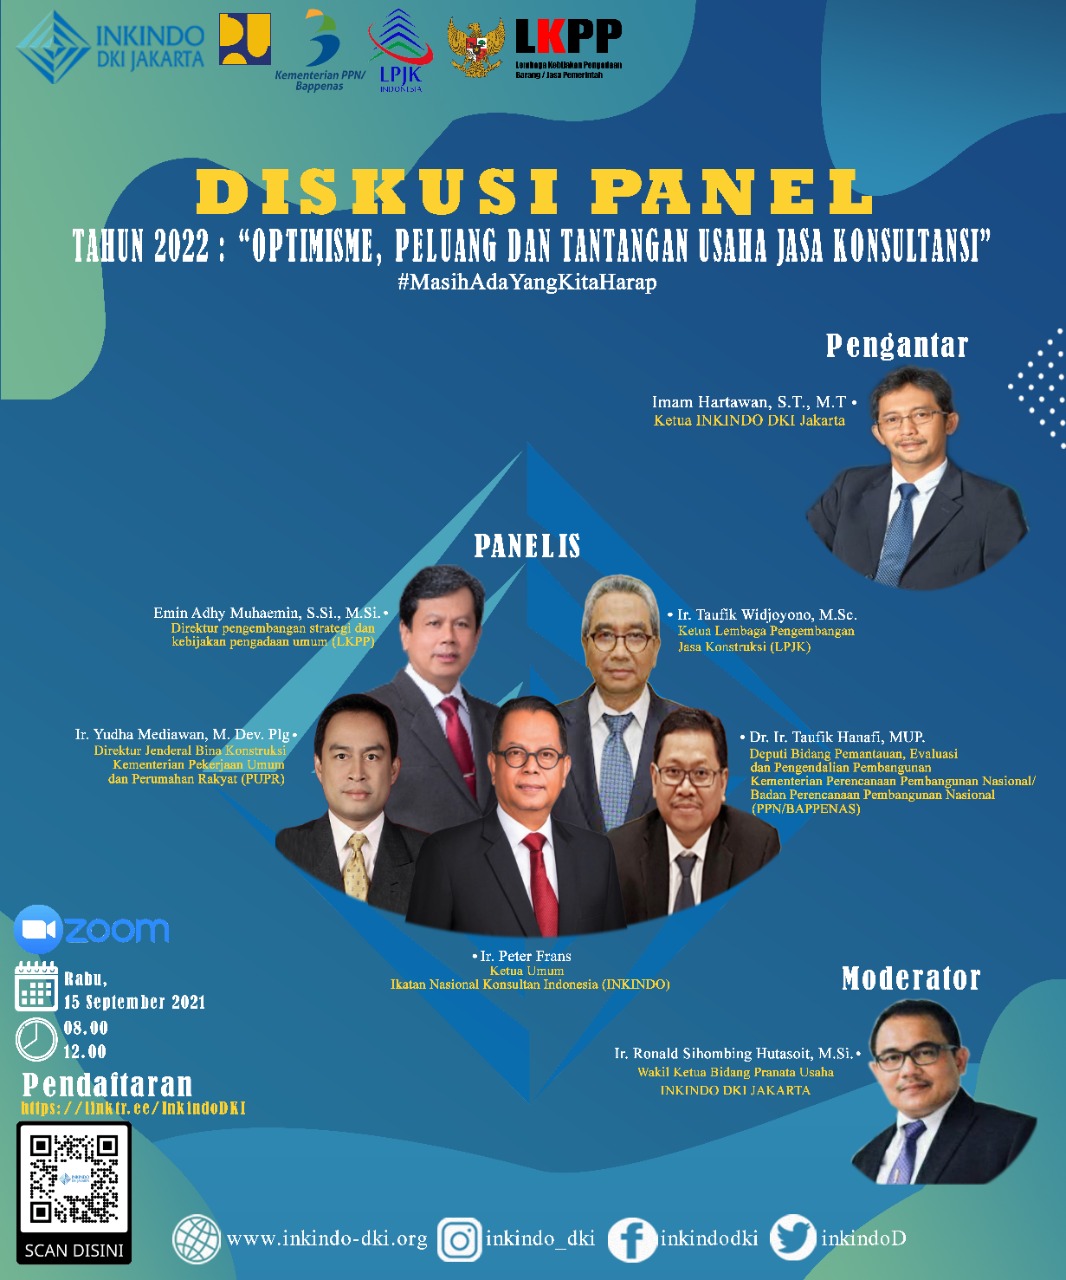 Diskusi Panel Dalam Rangka HUT INKINDO DKI Jakarta Ke-39 <h6>“Tahun 2022: Optimisme, Peluang dan Tantangan Usaha Jasa Konsultansi”</h6>